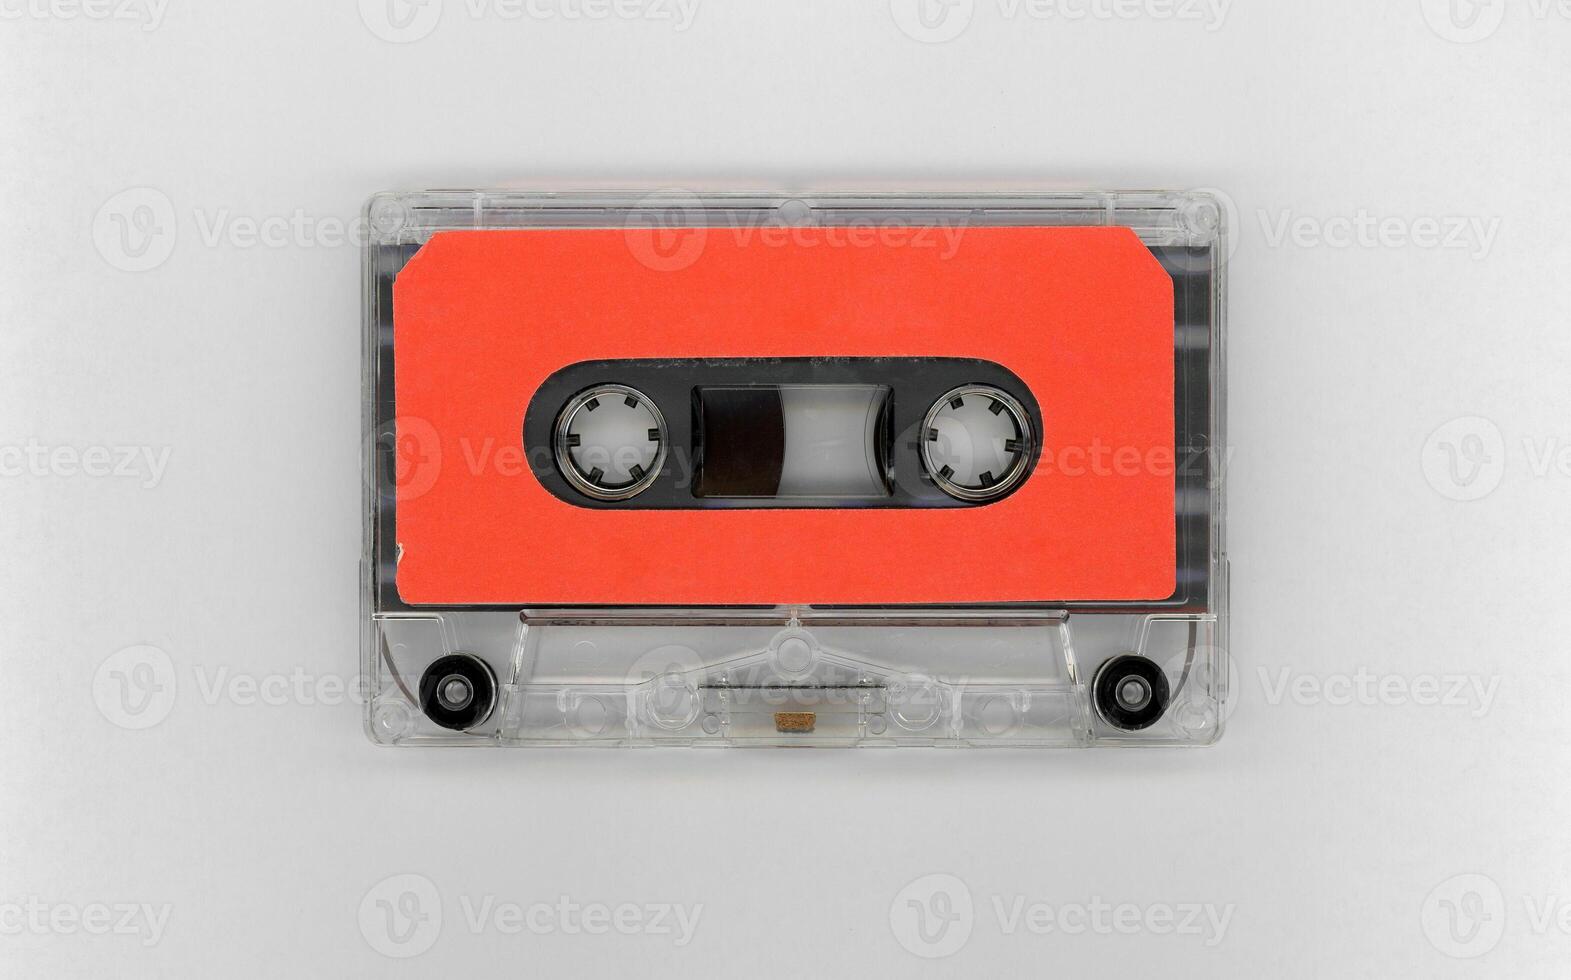 magnetic tape cassette photo